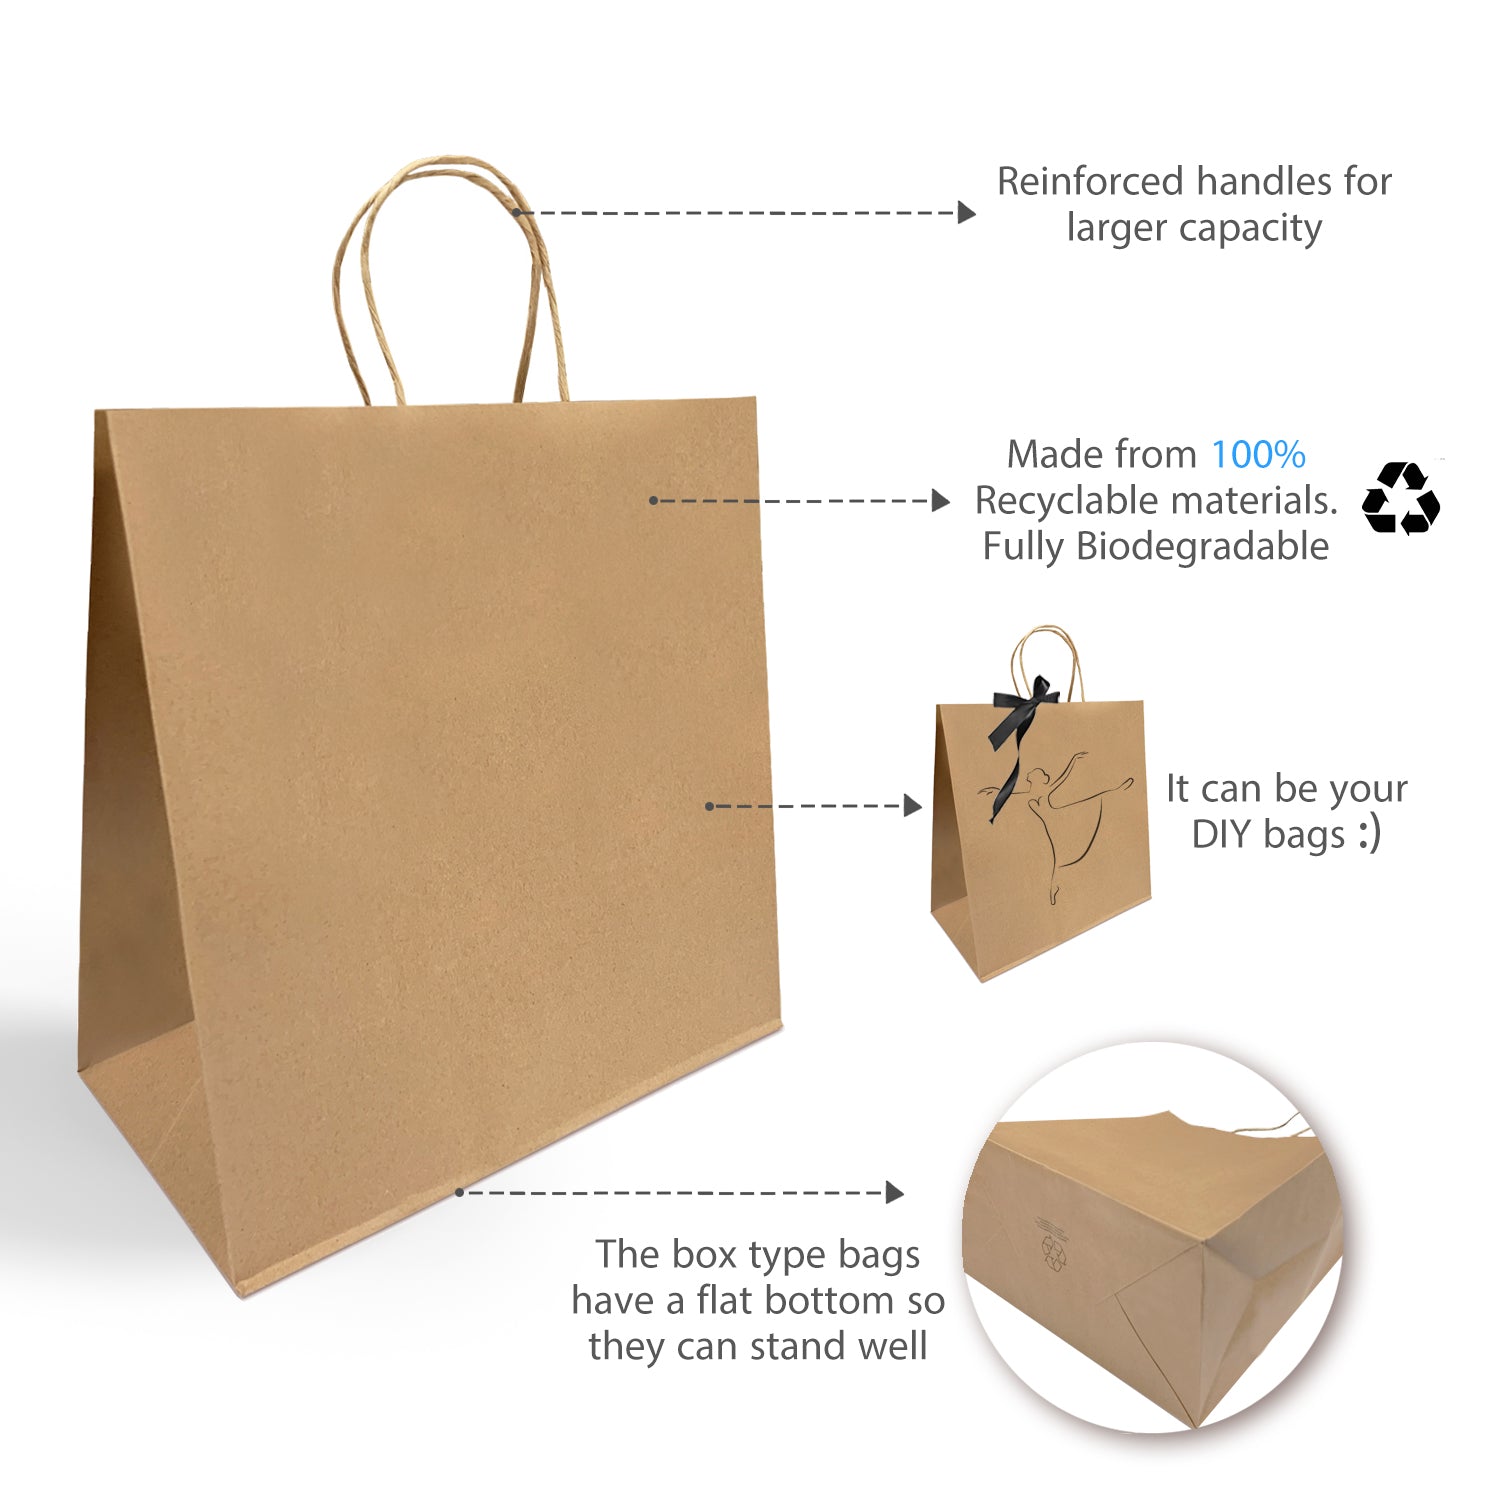 Twisted Handle Paper Bag - İstpack Packaging